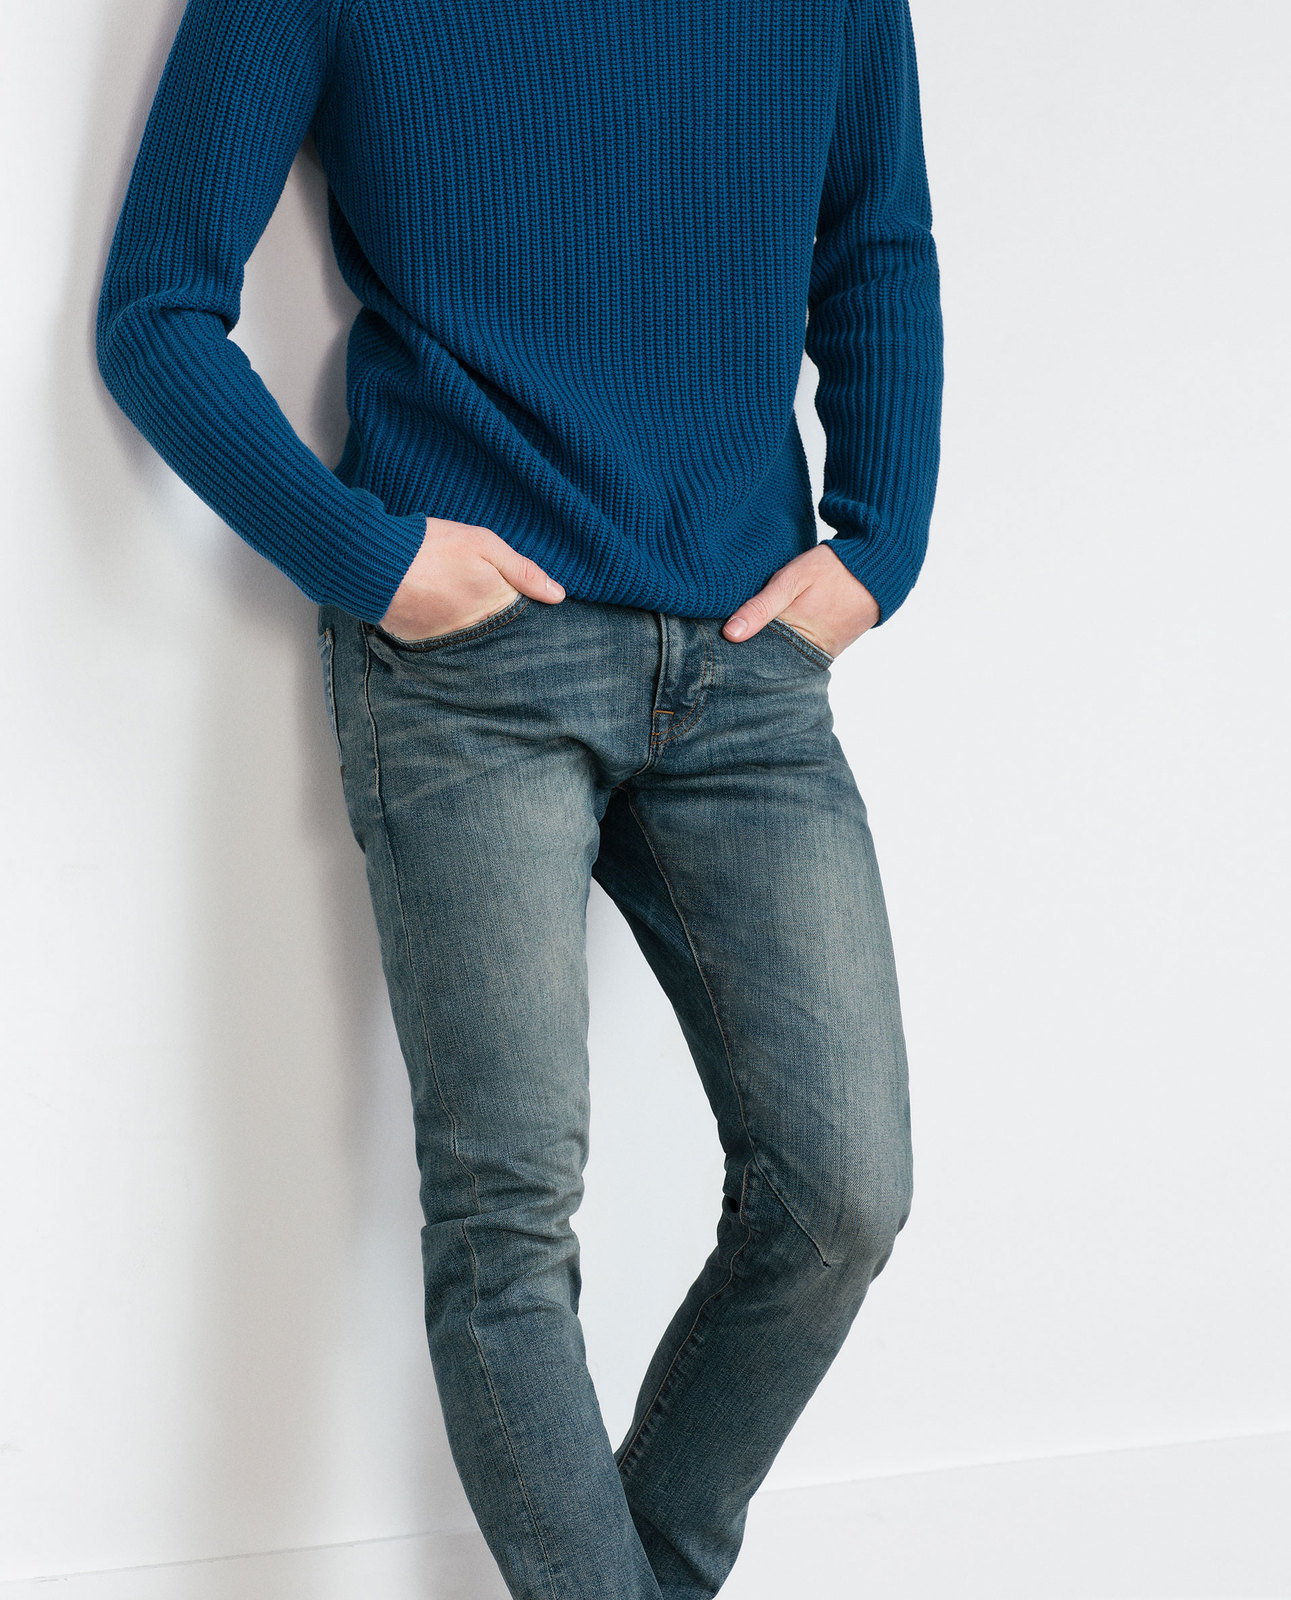 Zara divatos férfi farmer nadrág 2015.10.15 fotója